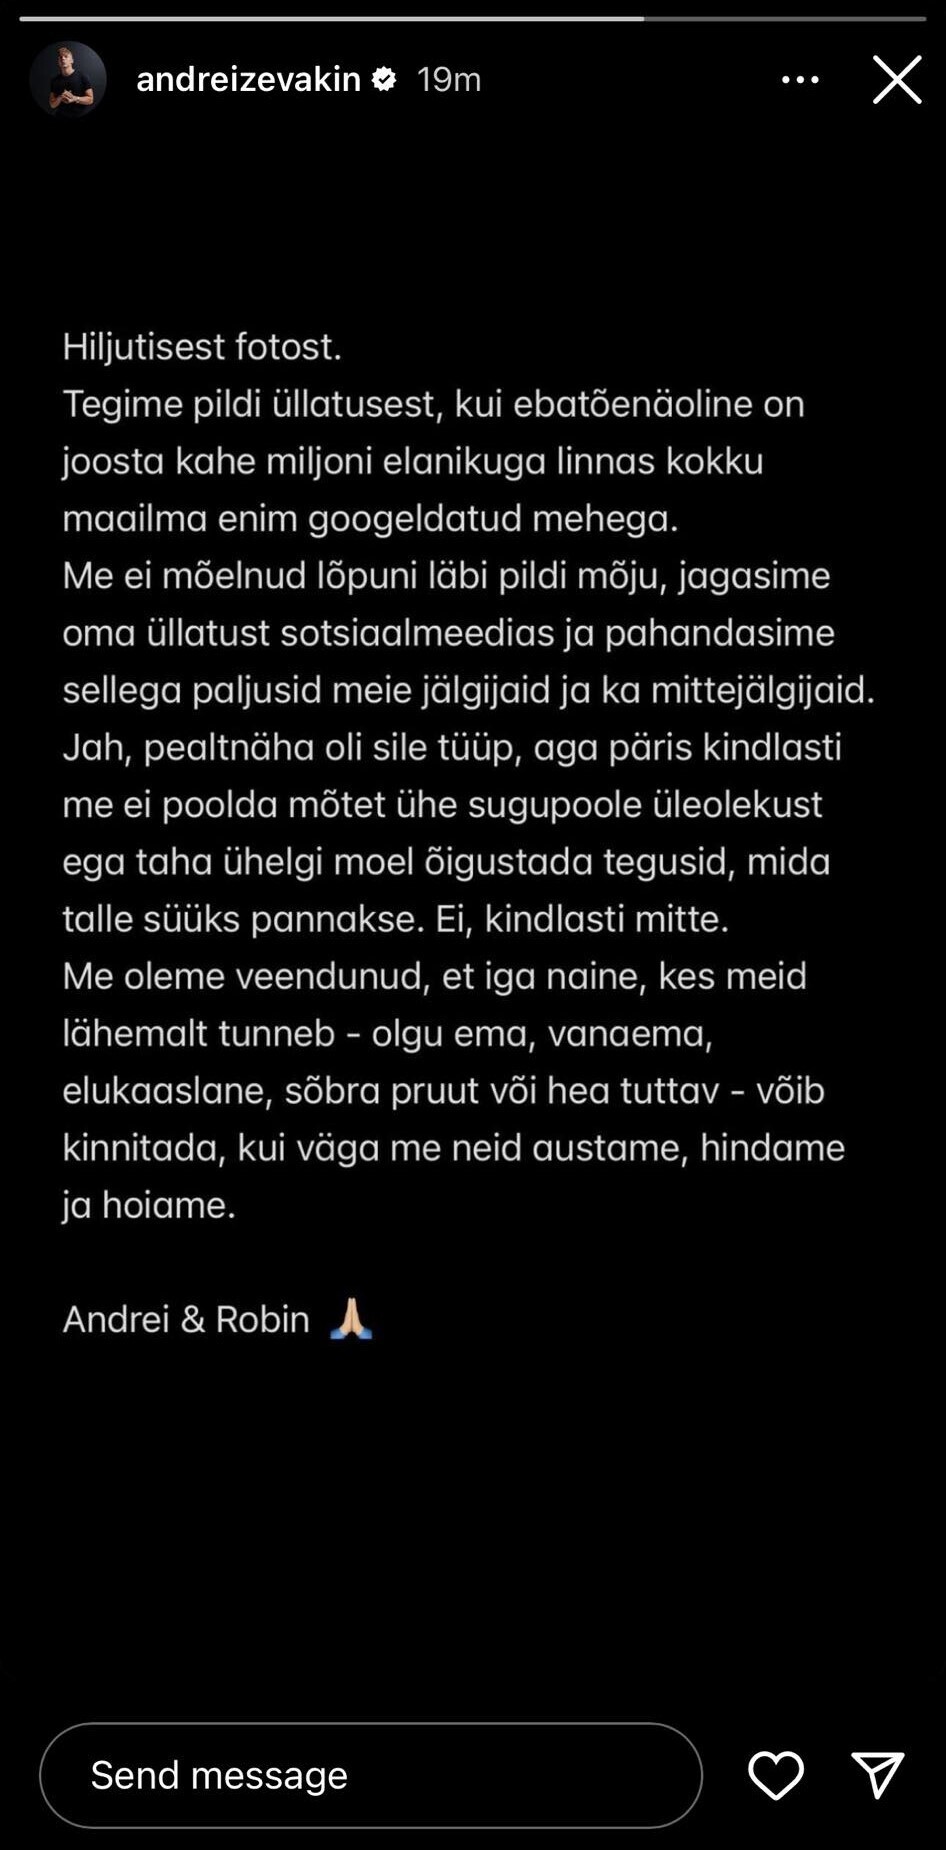 Andrei Zevakini Instagrami story